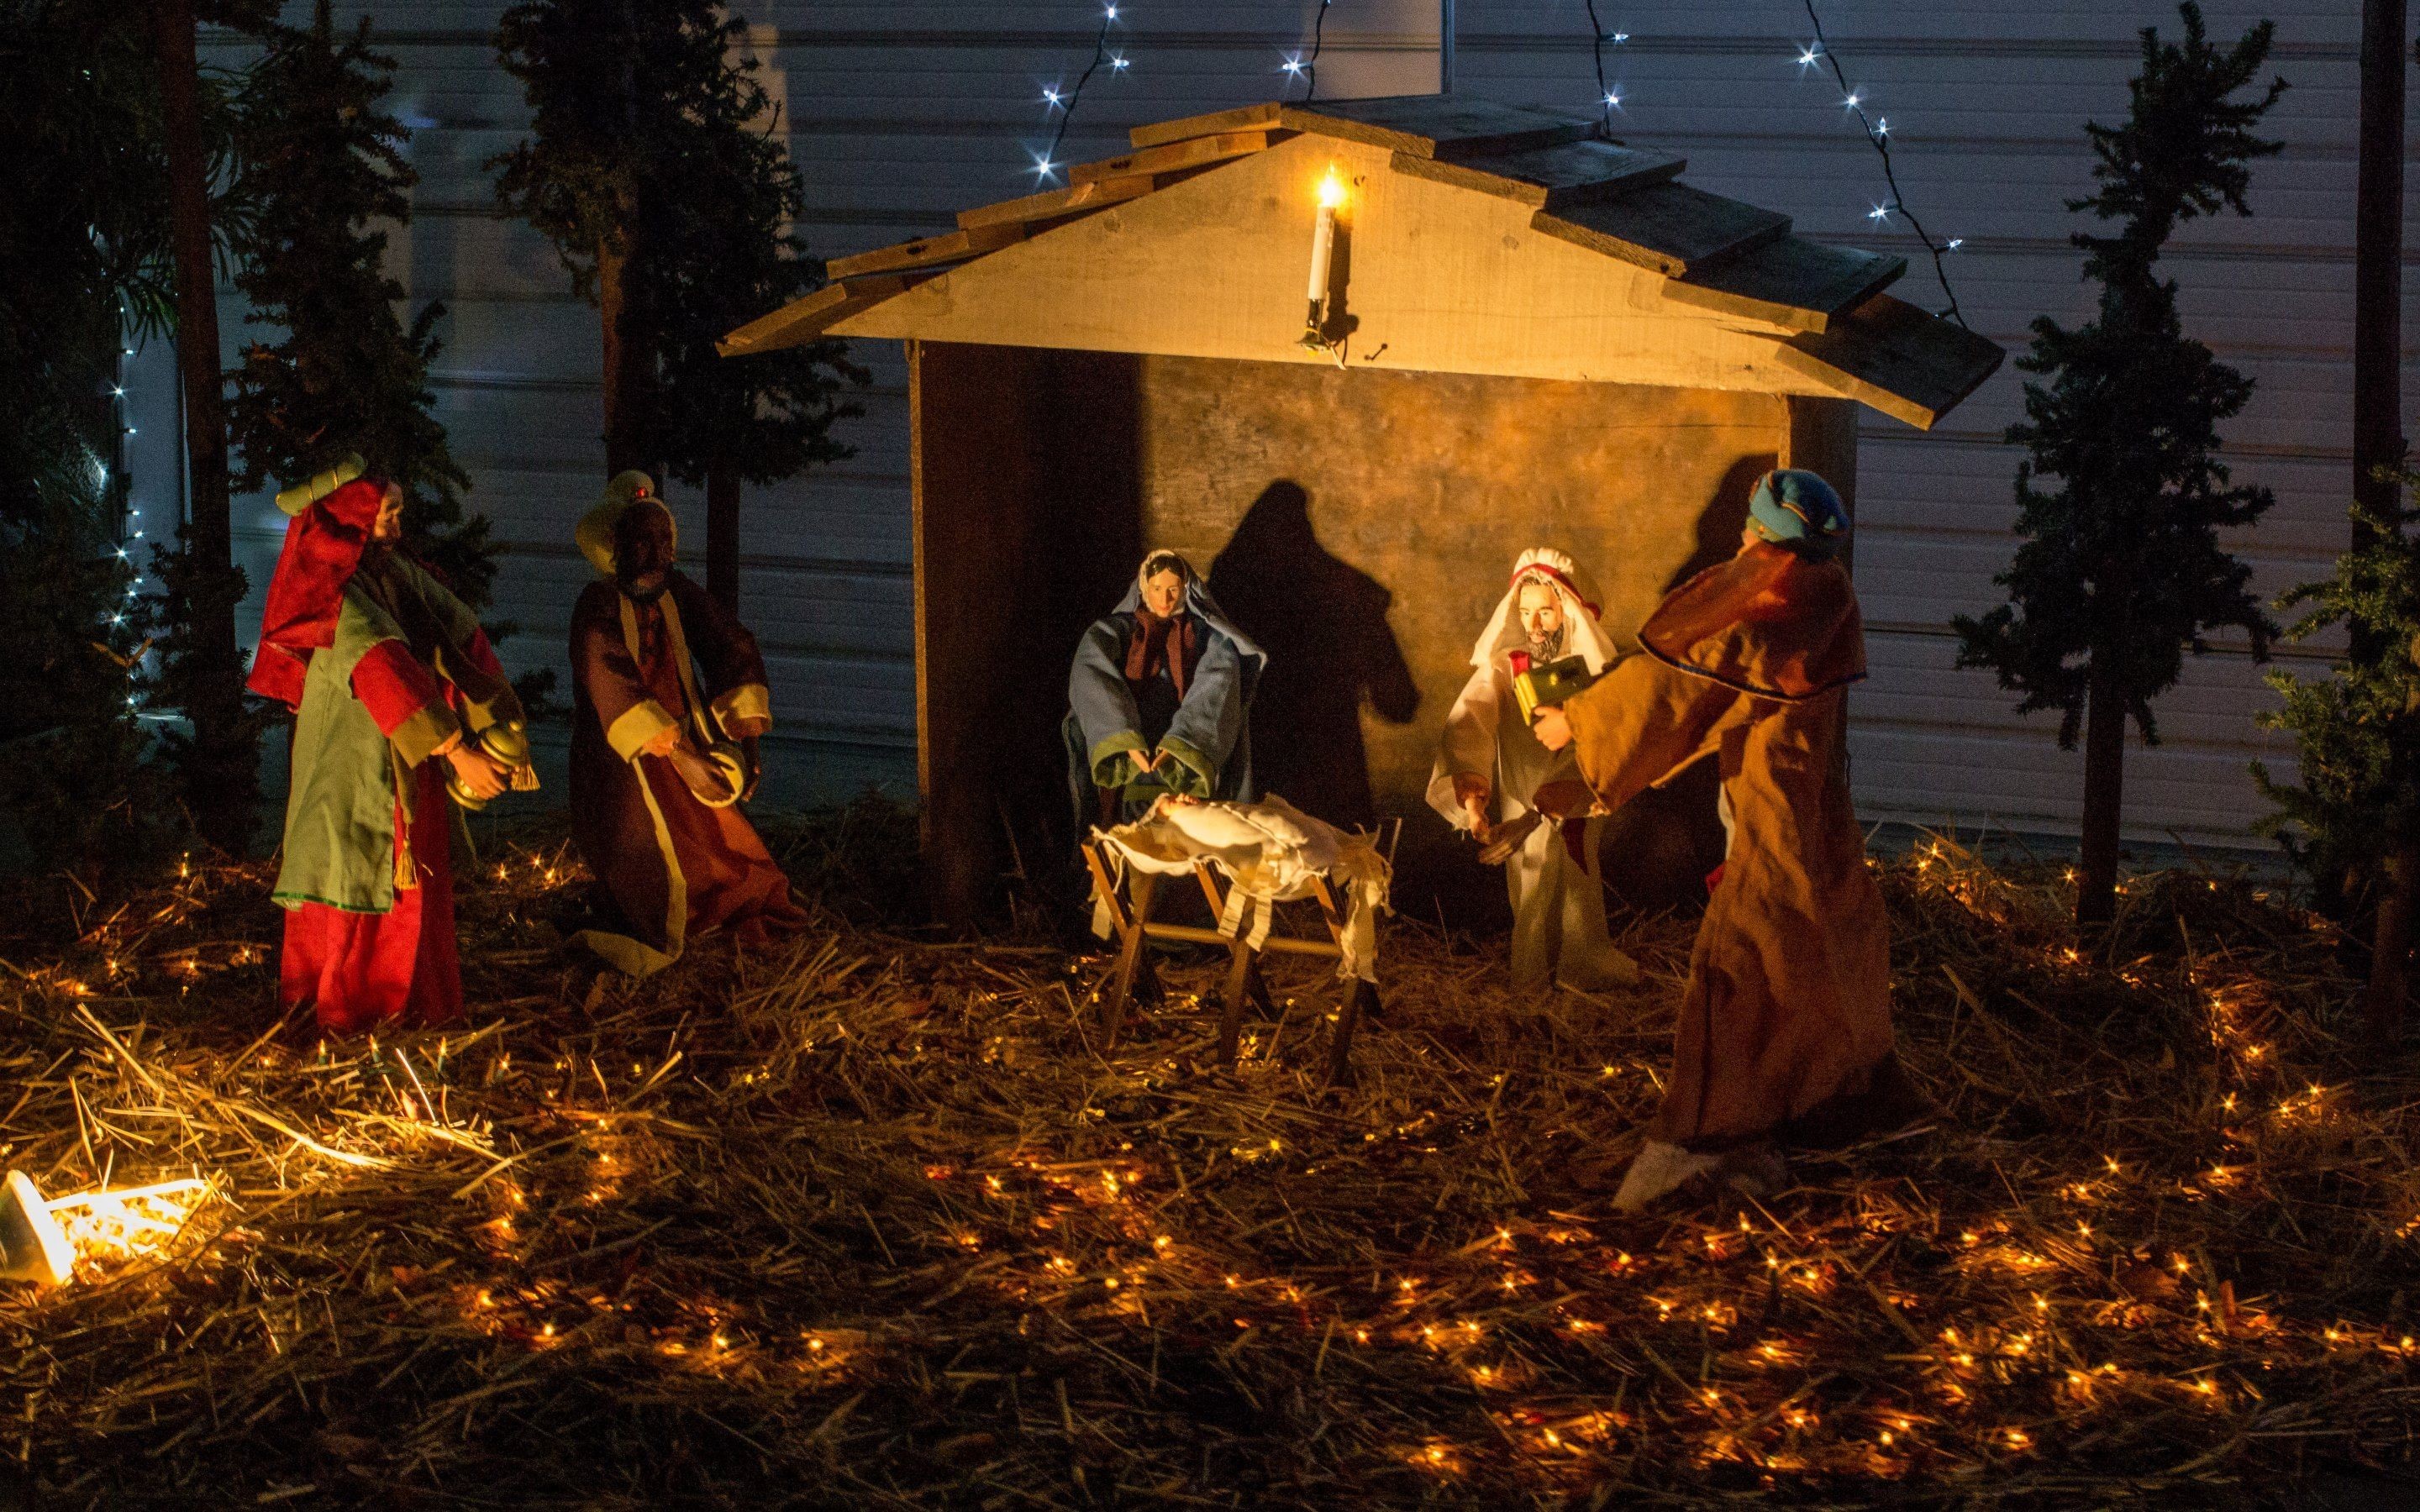 Nativity Scene Desktop Wallpaper